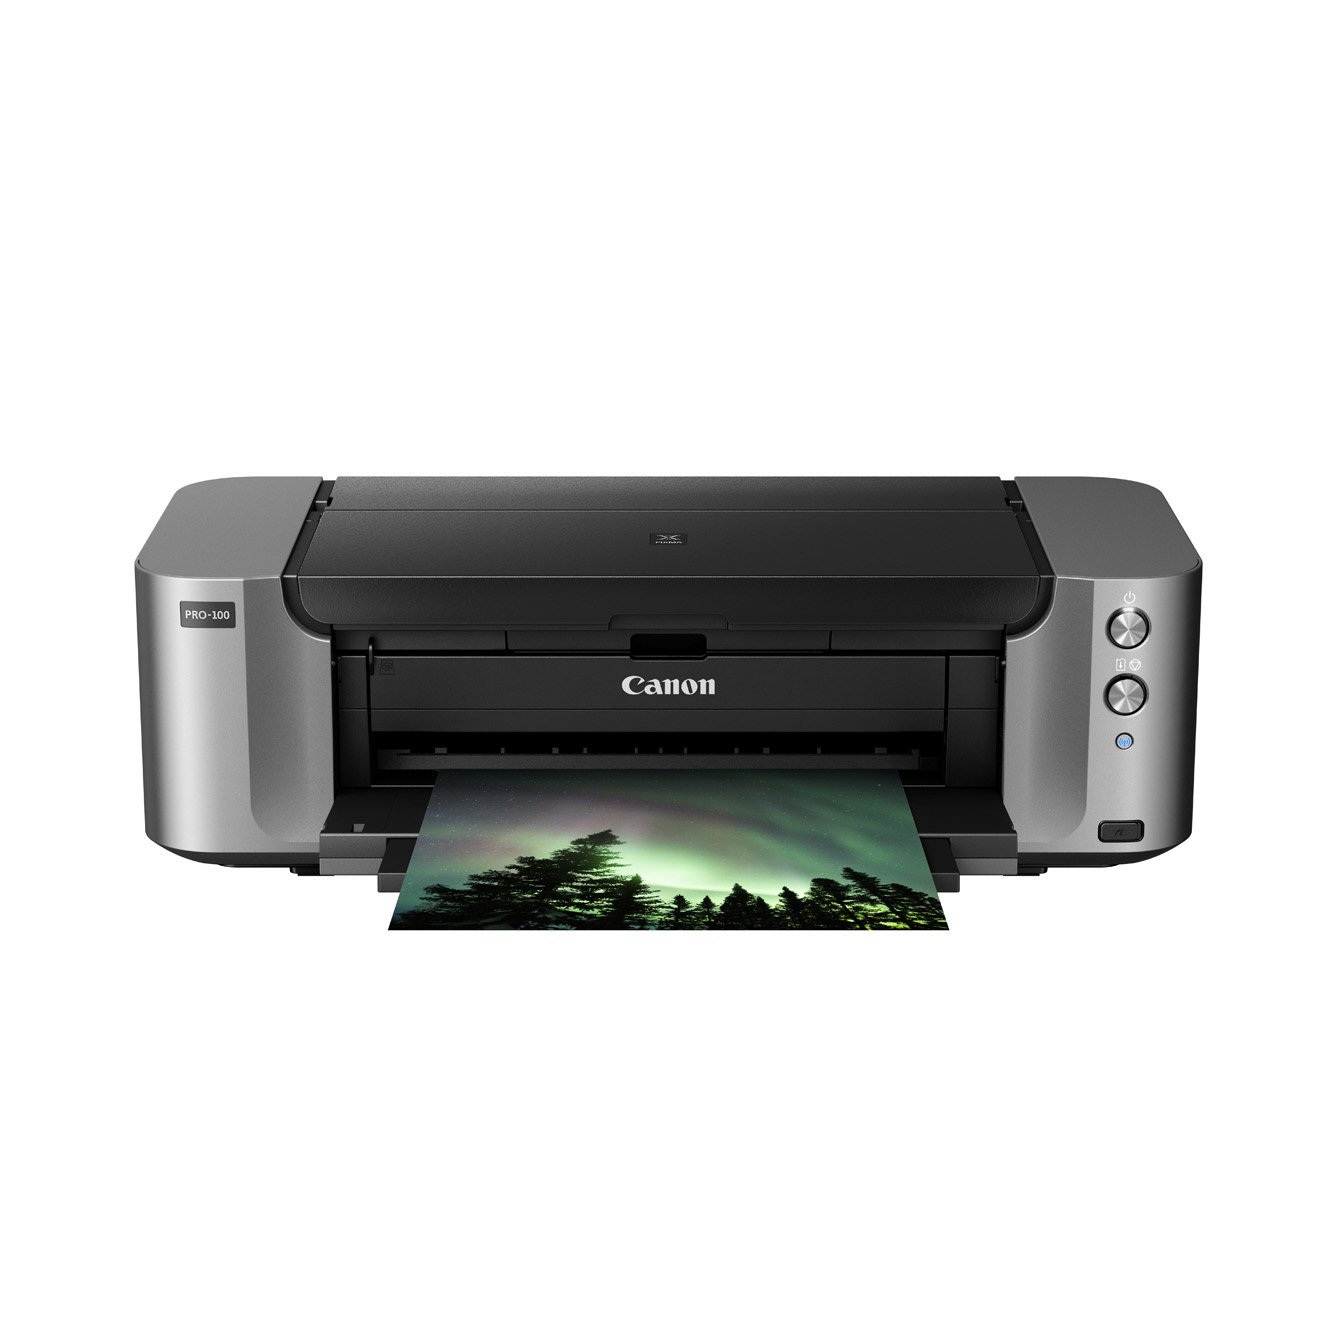 Canon PIXMA PRO-100 Color Professional Inkjet Photo Printer $130